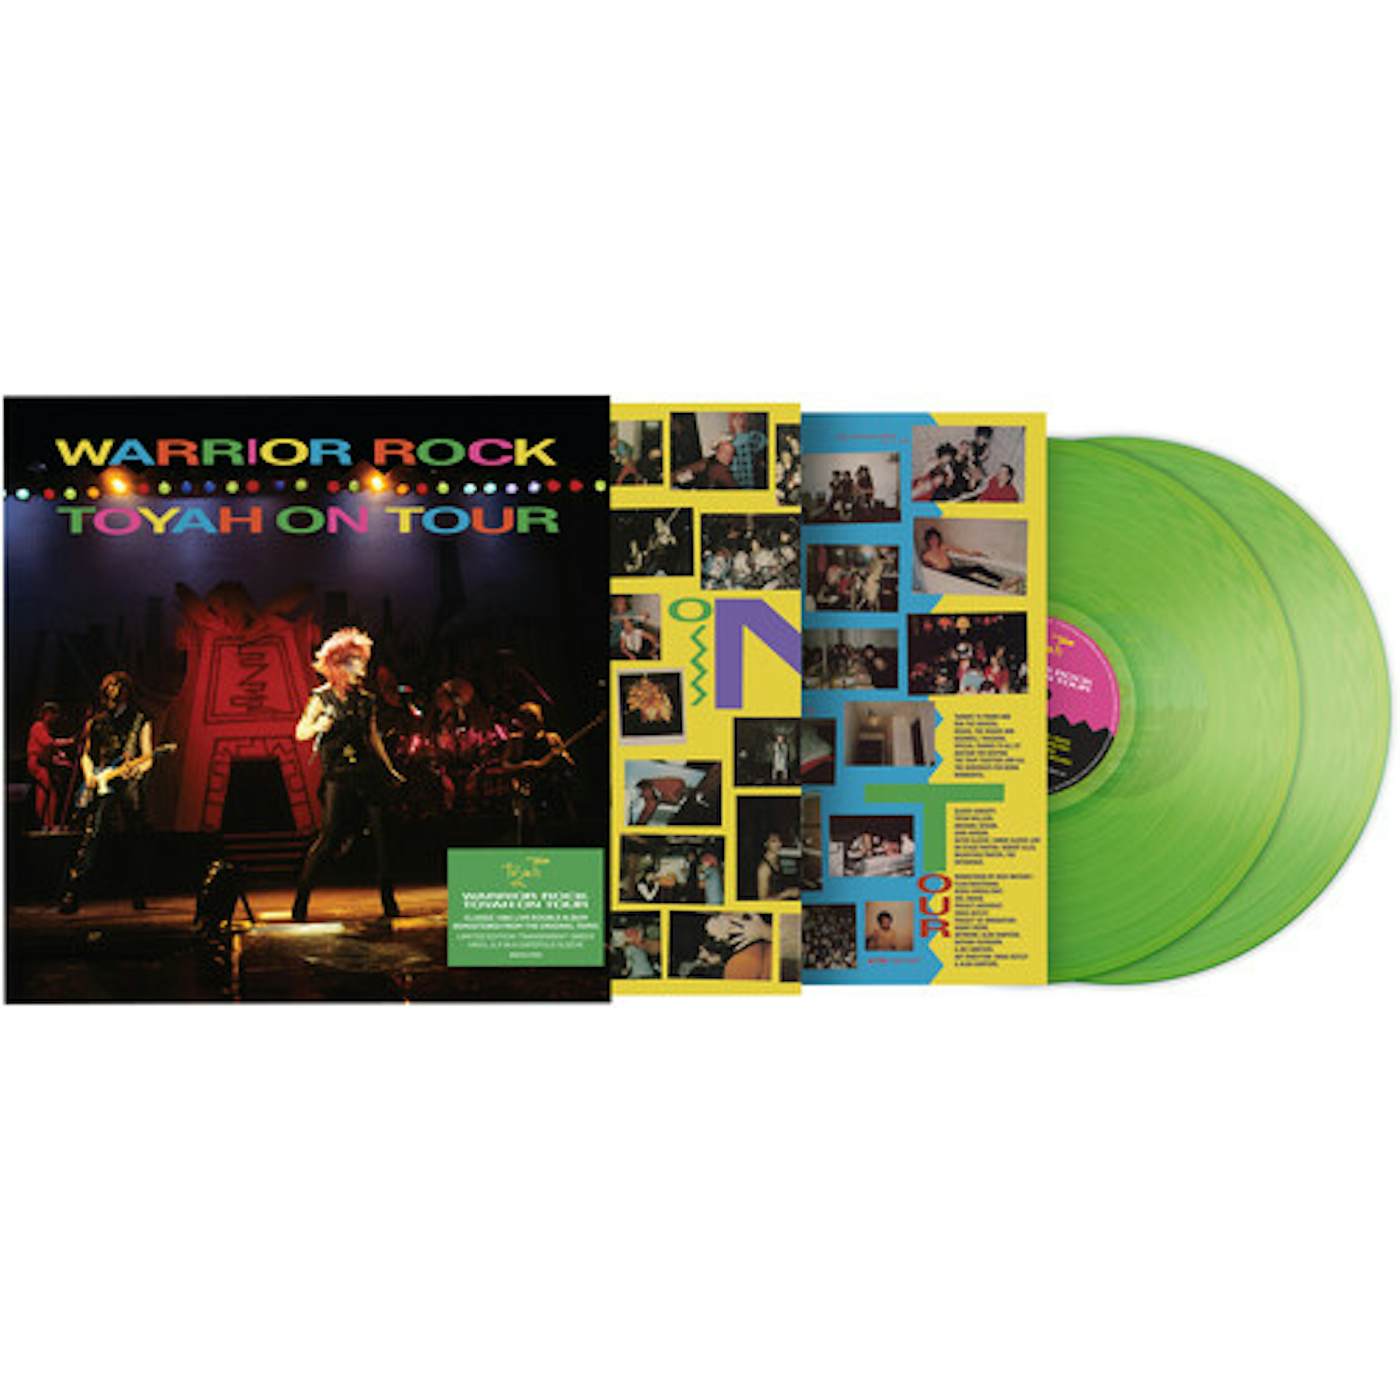 WARRIOR ROCK - TOYAH ON TOUR - TRANSPARENT GREEN Vinyl Record